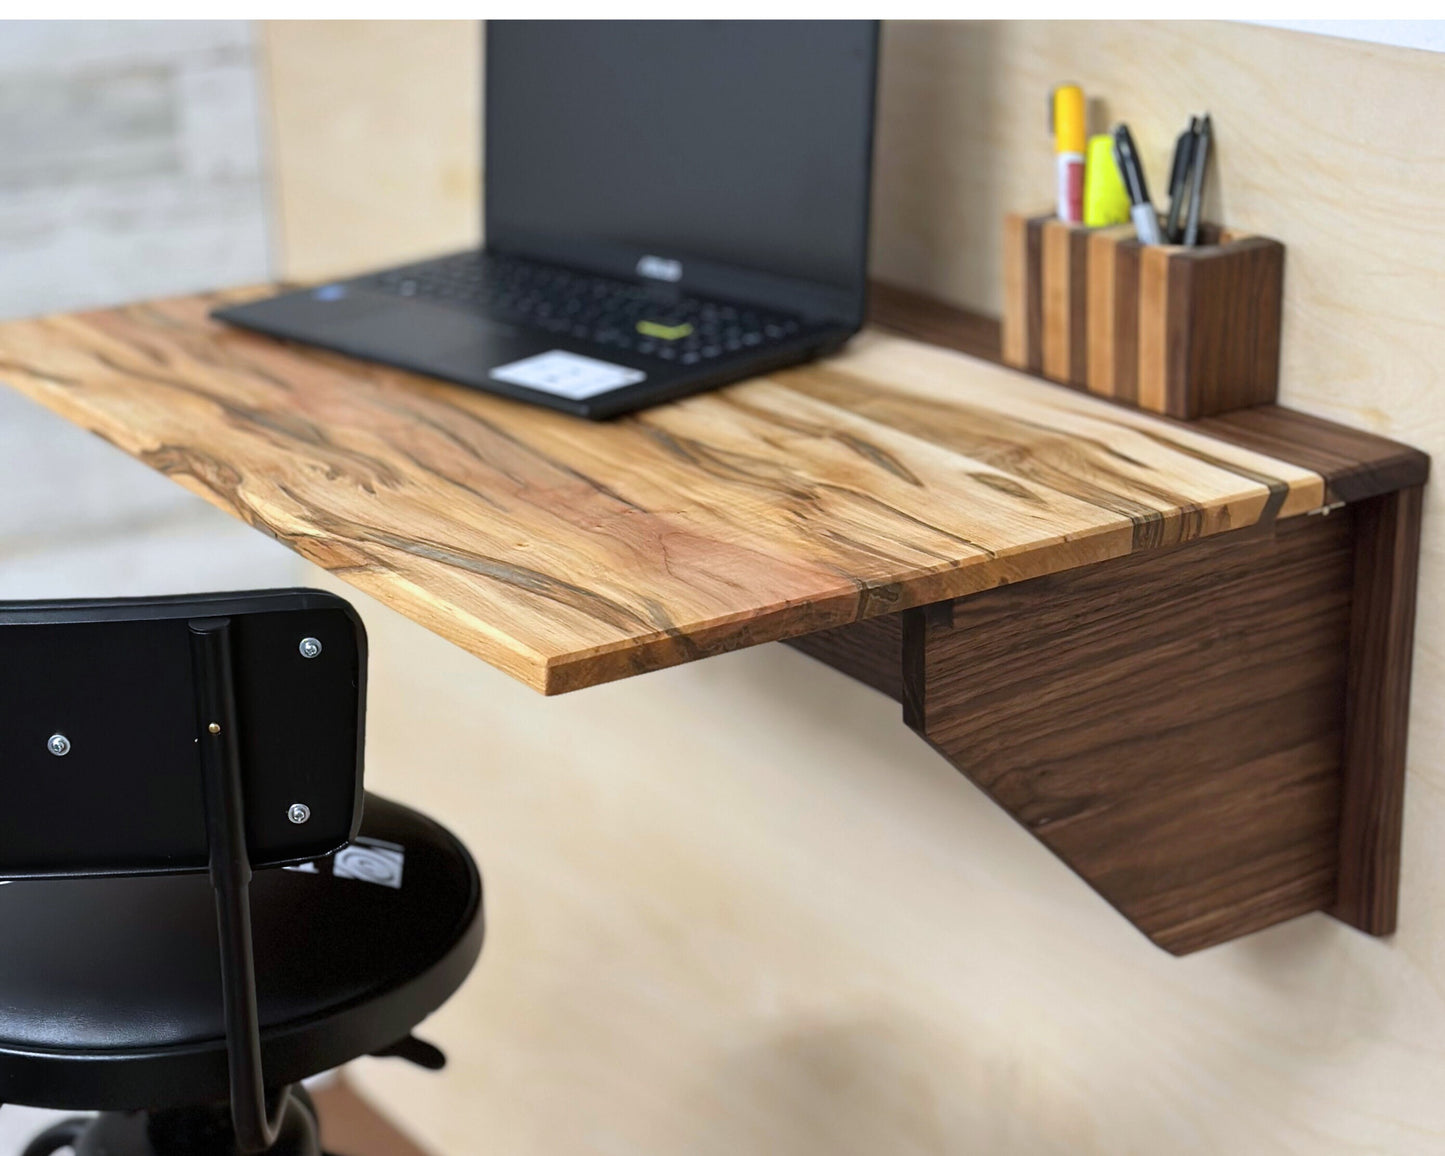 Ashland Murphy Desk, Wall Mounted Table  | Multifunctional Furniture|  Space Saving Modern Folding Desk for Writing